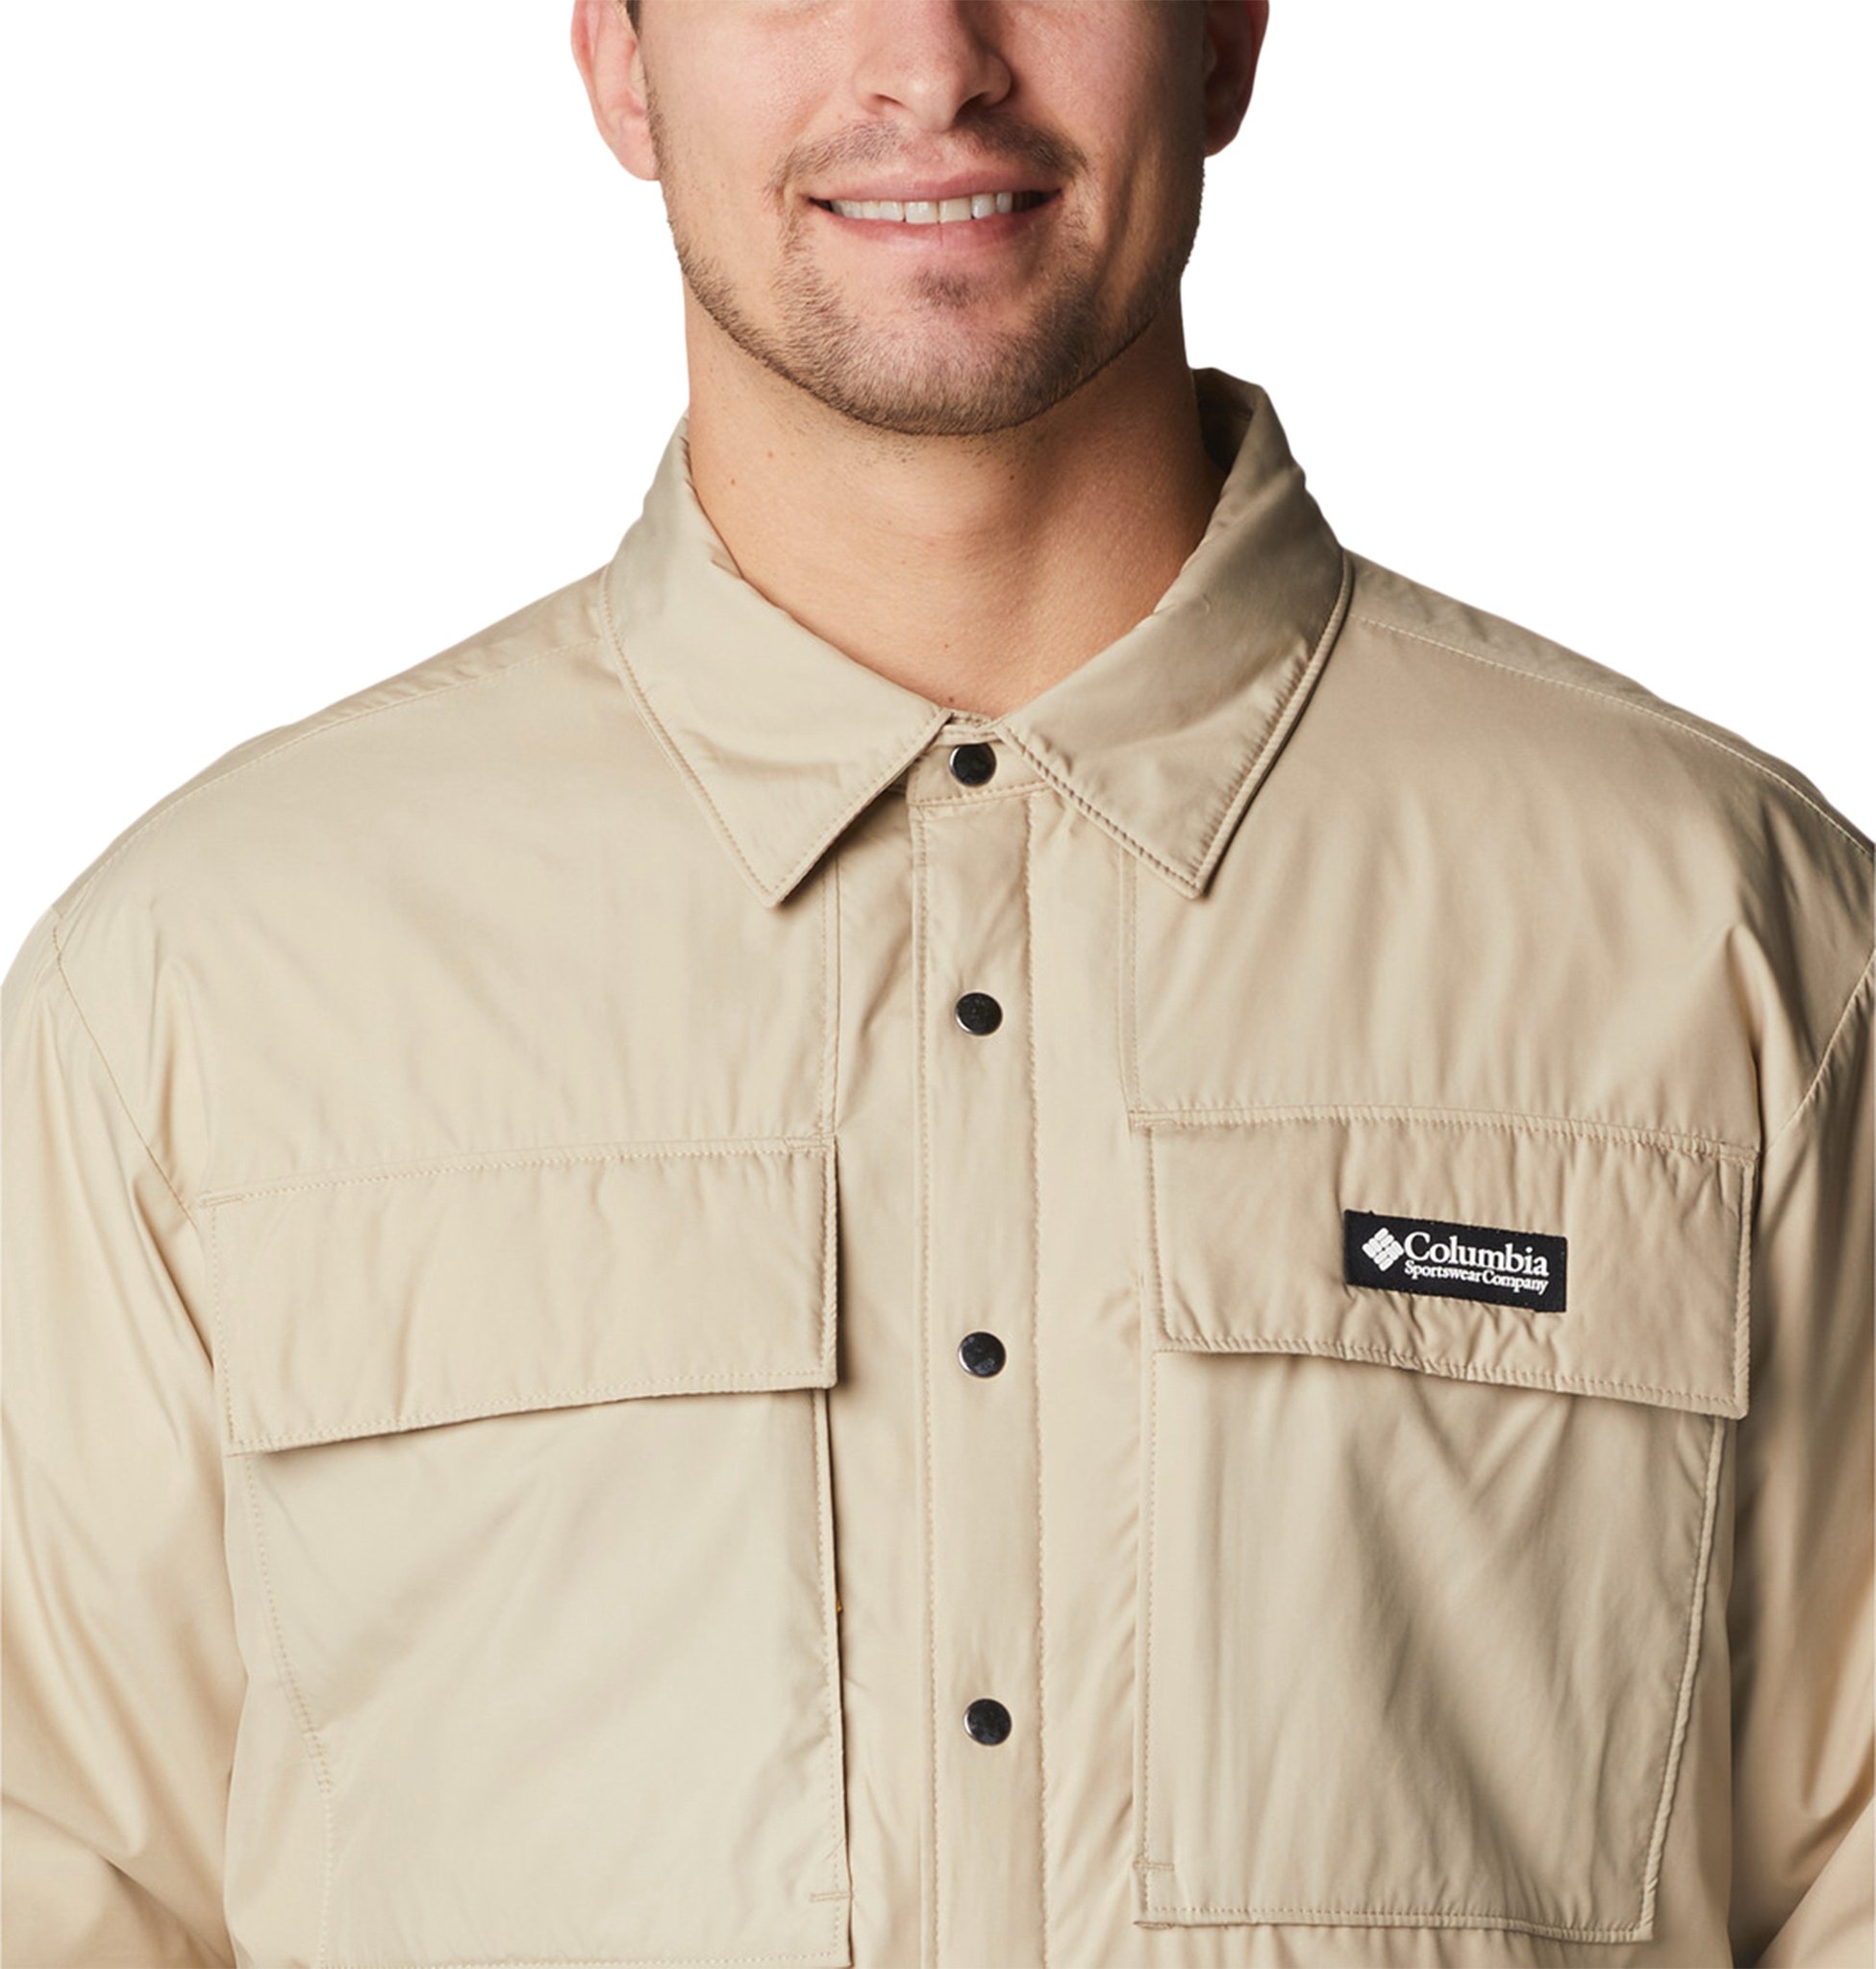 Columbia Ballistic Ridge Shirt Jacket - Men's